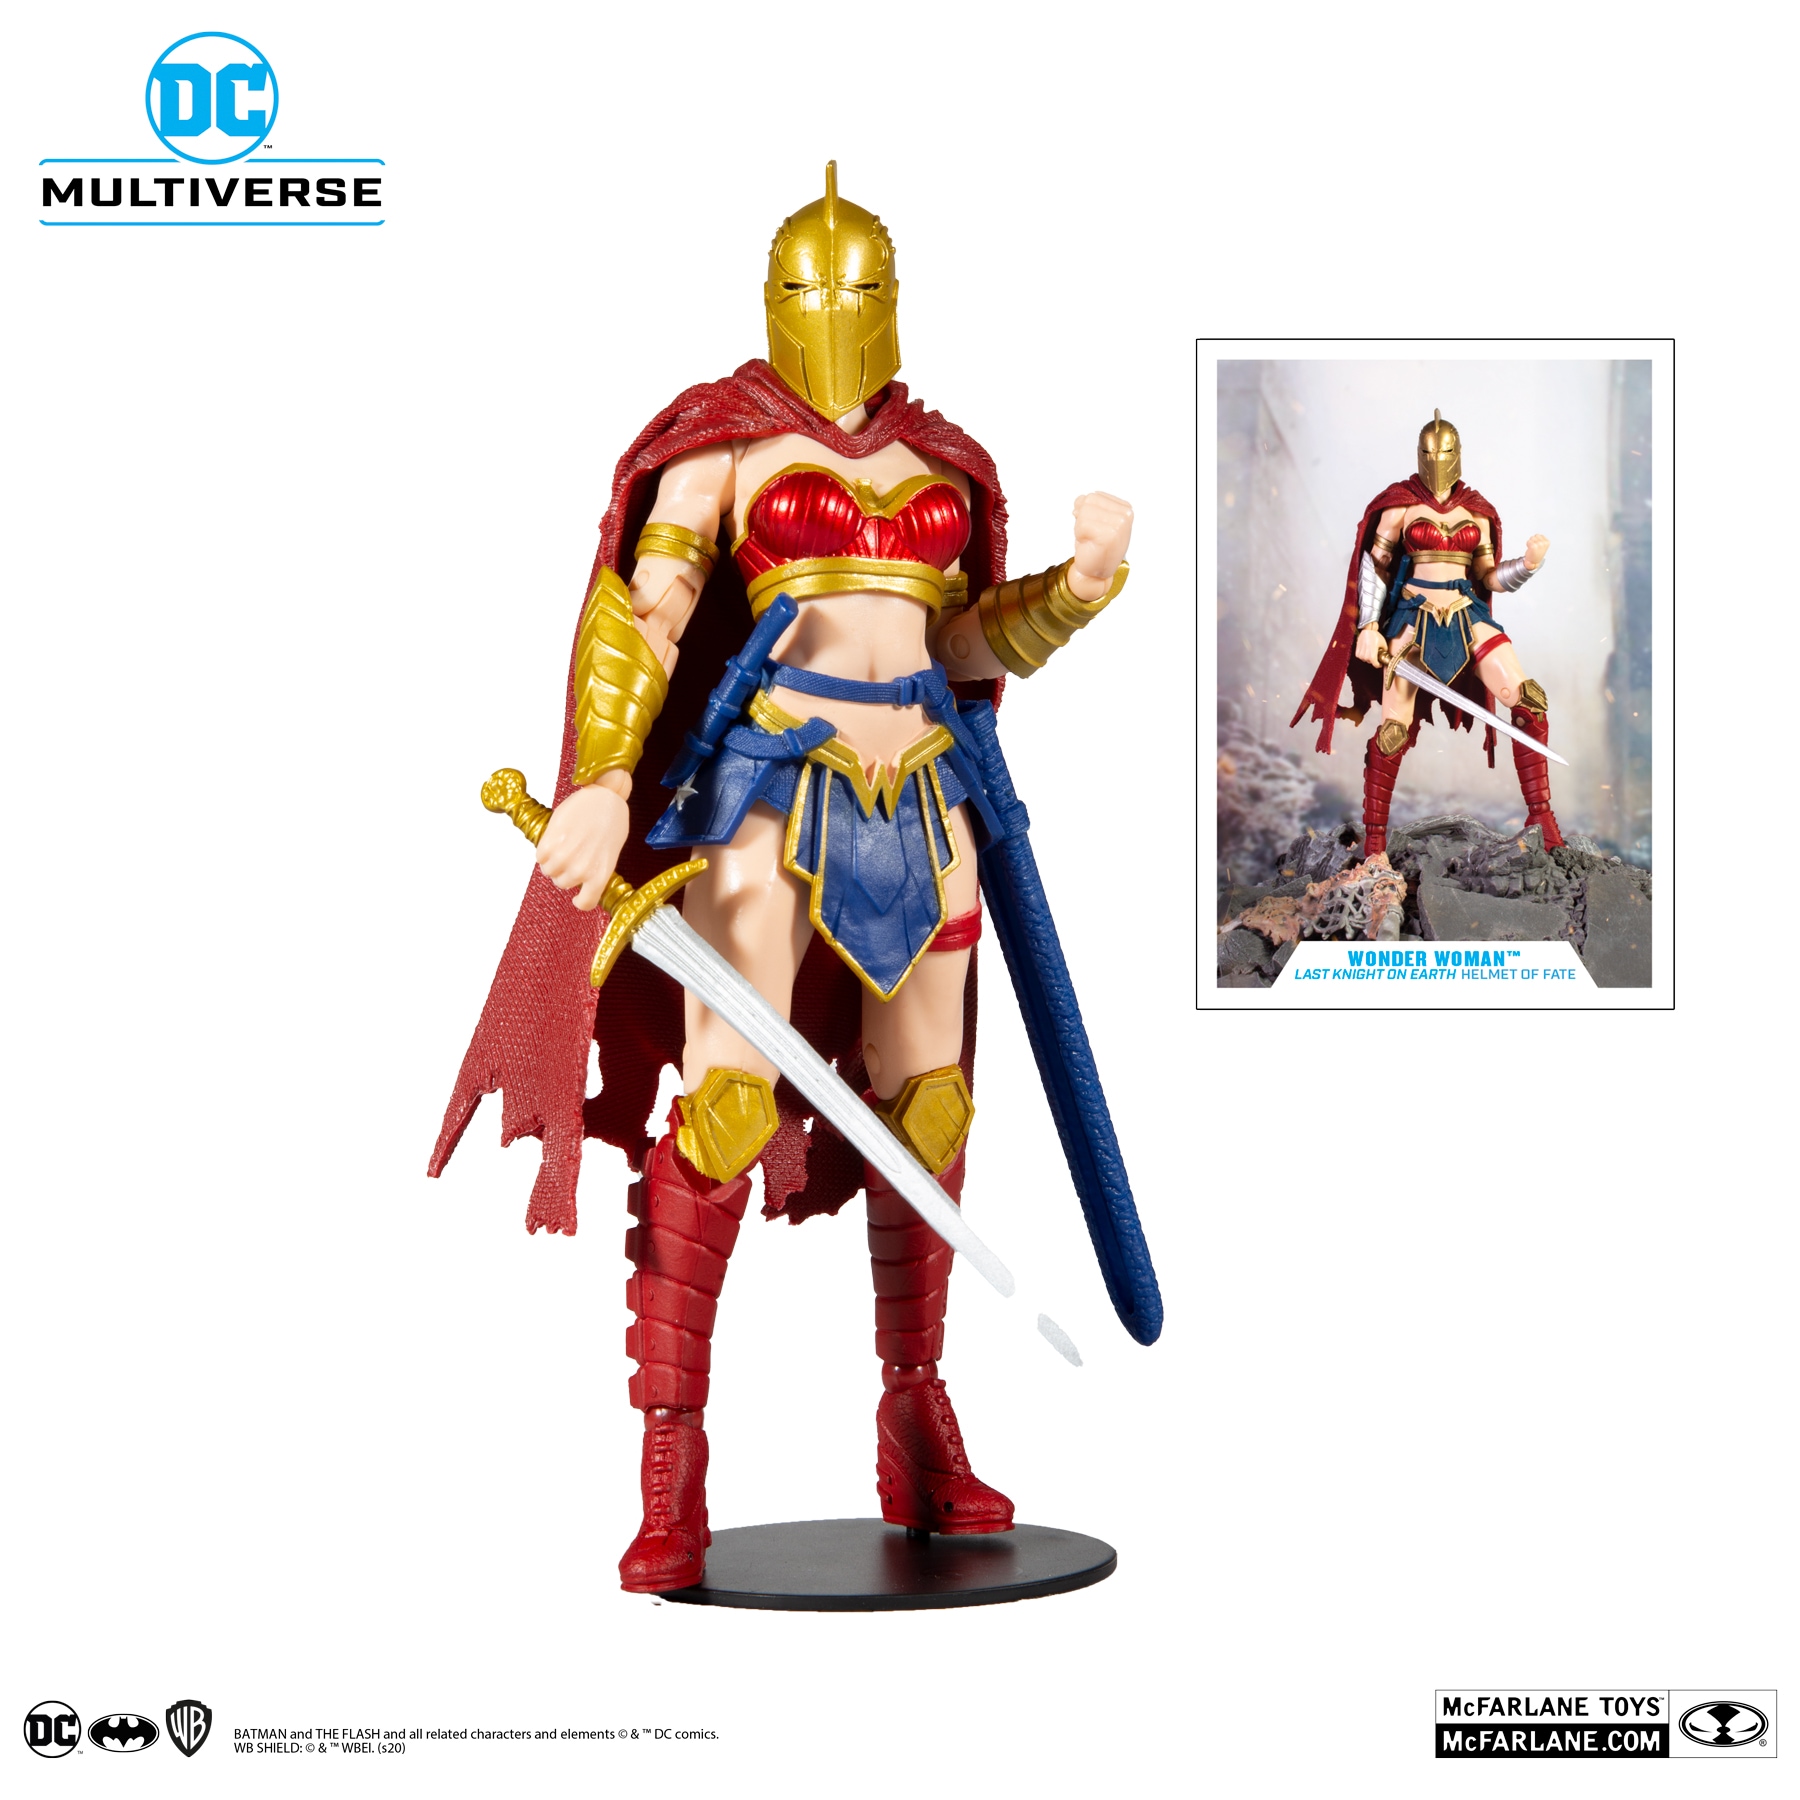 DC Multiverse  The Last Knight on Earth:   Wonder Woman with helmet 18 cm  Comics Plastic - 1